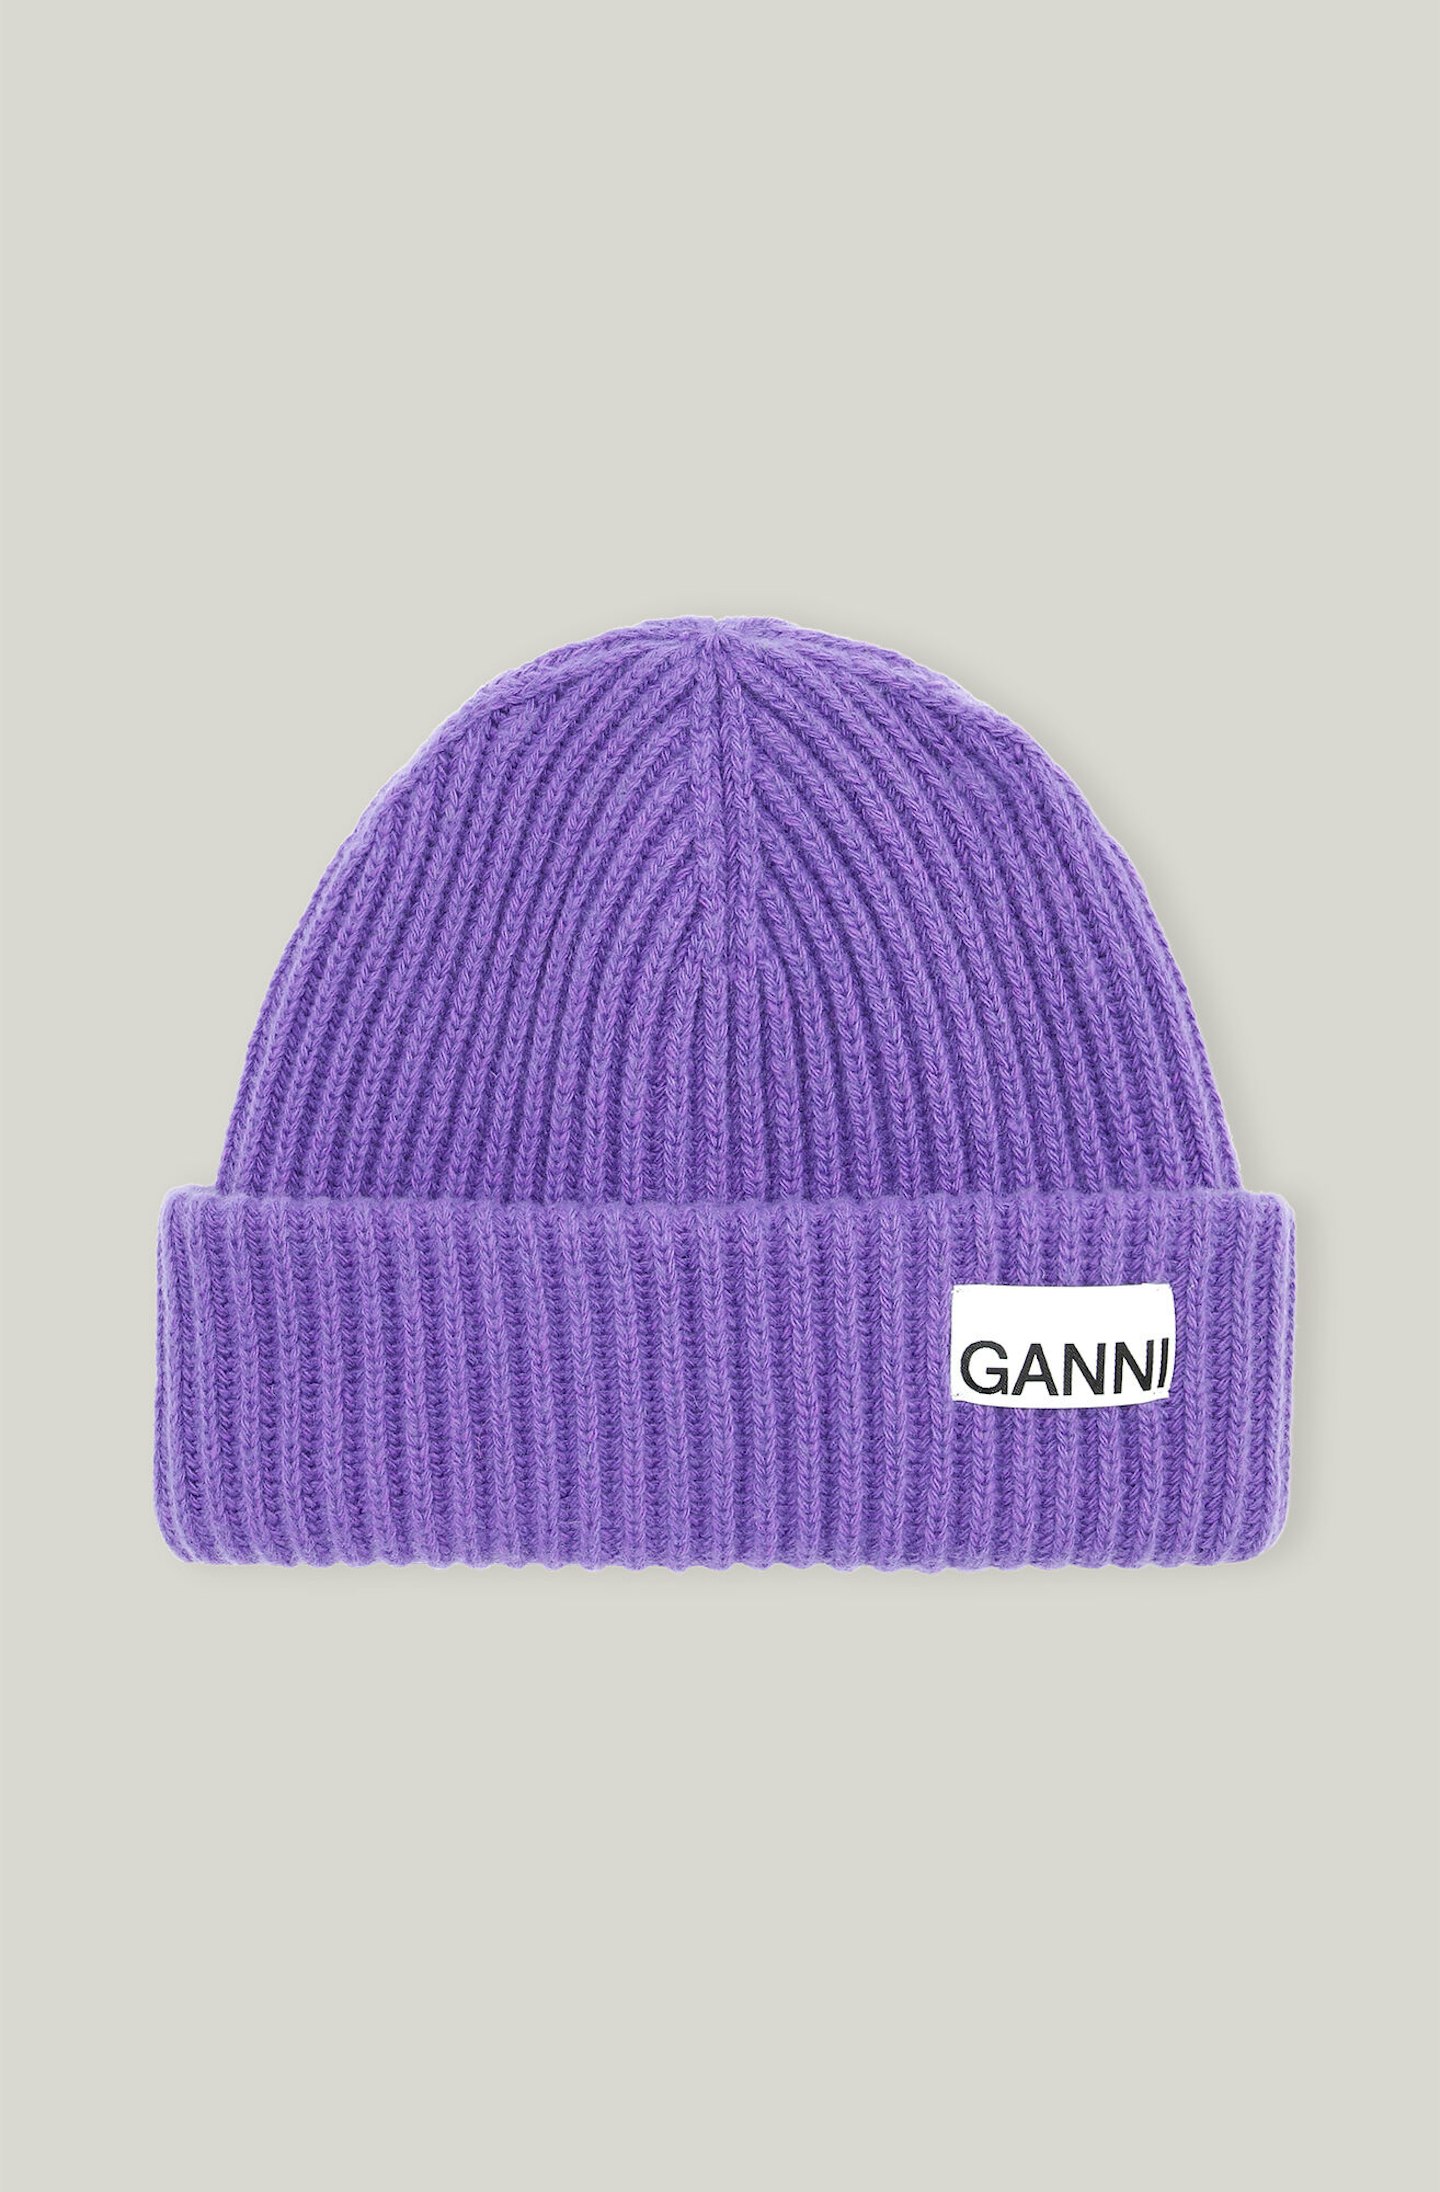 Ganni, Rib Knit Beanie, £75